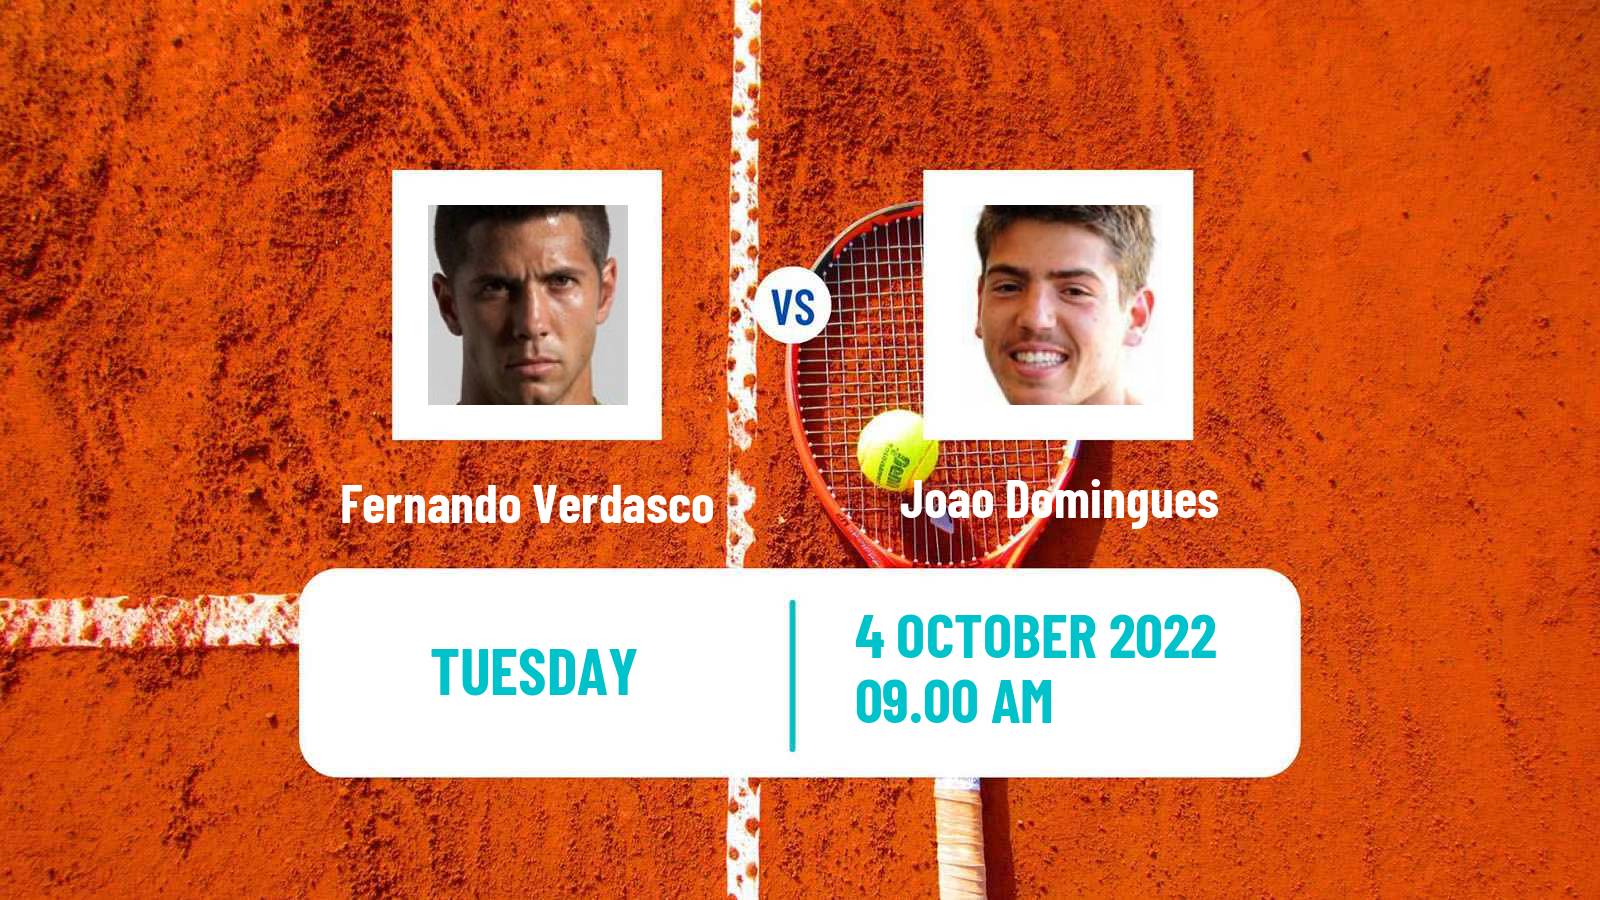 Tennis ATP Challenger Fernando Verdasco - Joao Domingues